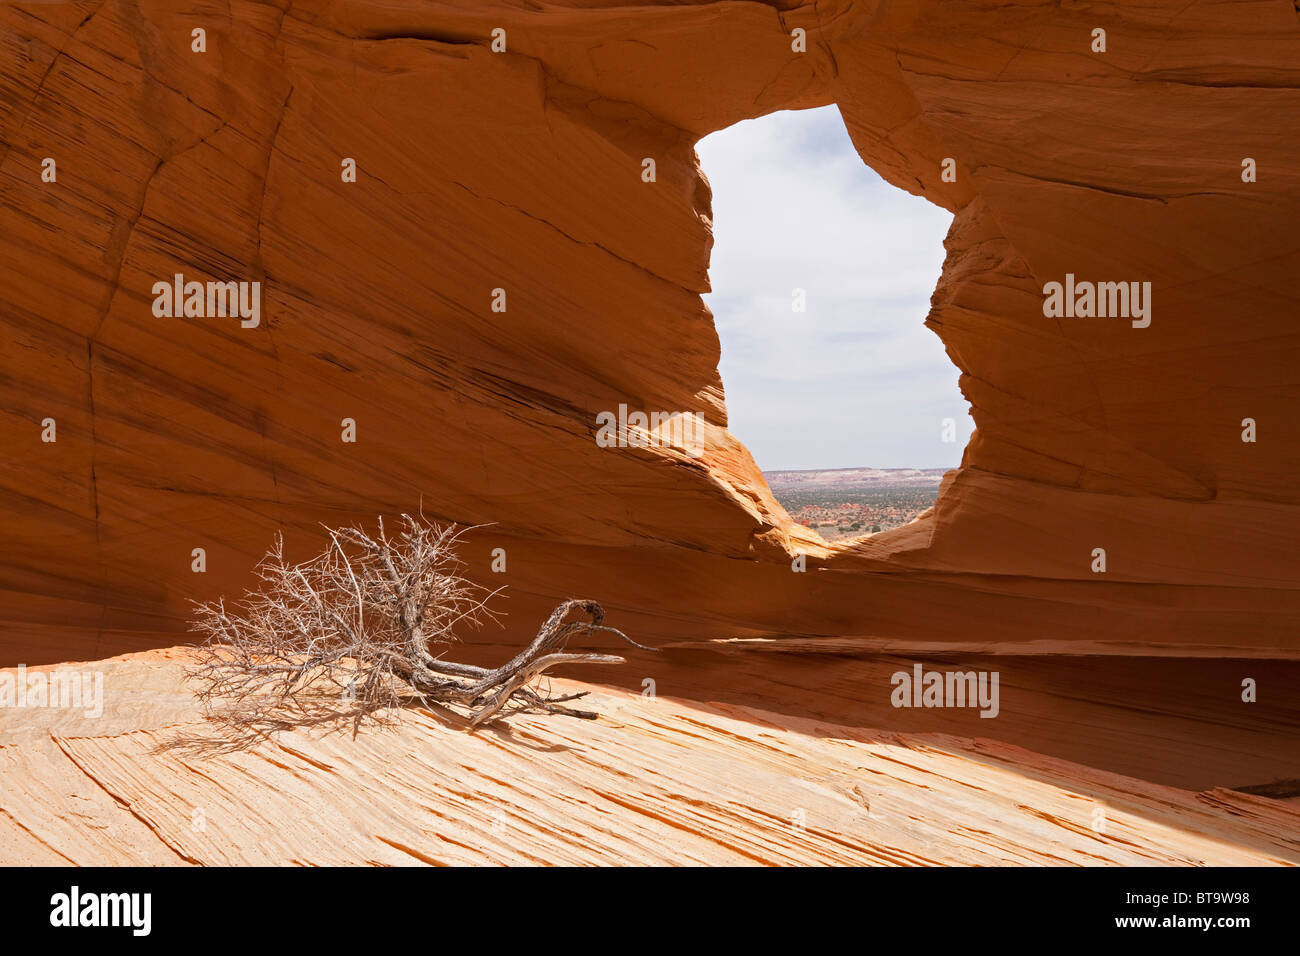 Melody Arch, Coyote Buttes North, Paria Canyon-Vermilion Cliffs Wilderness, Utah, Arizona, USA Banque D'Images